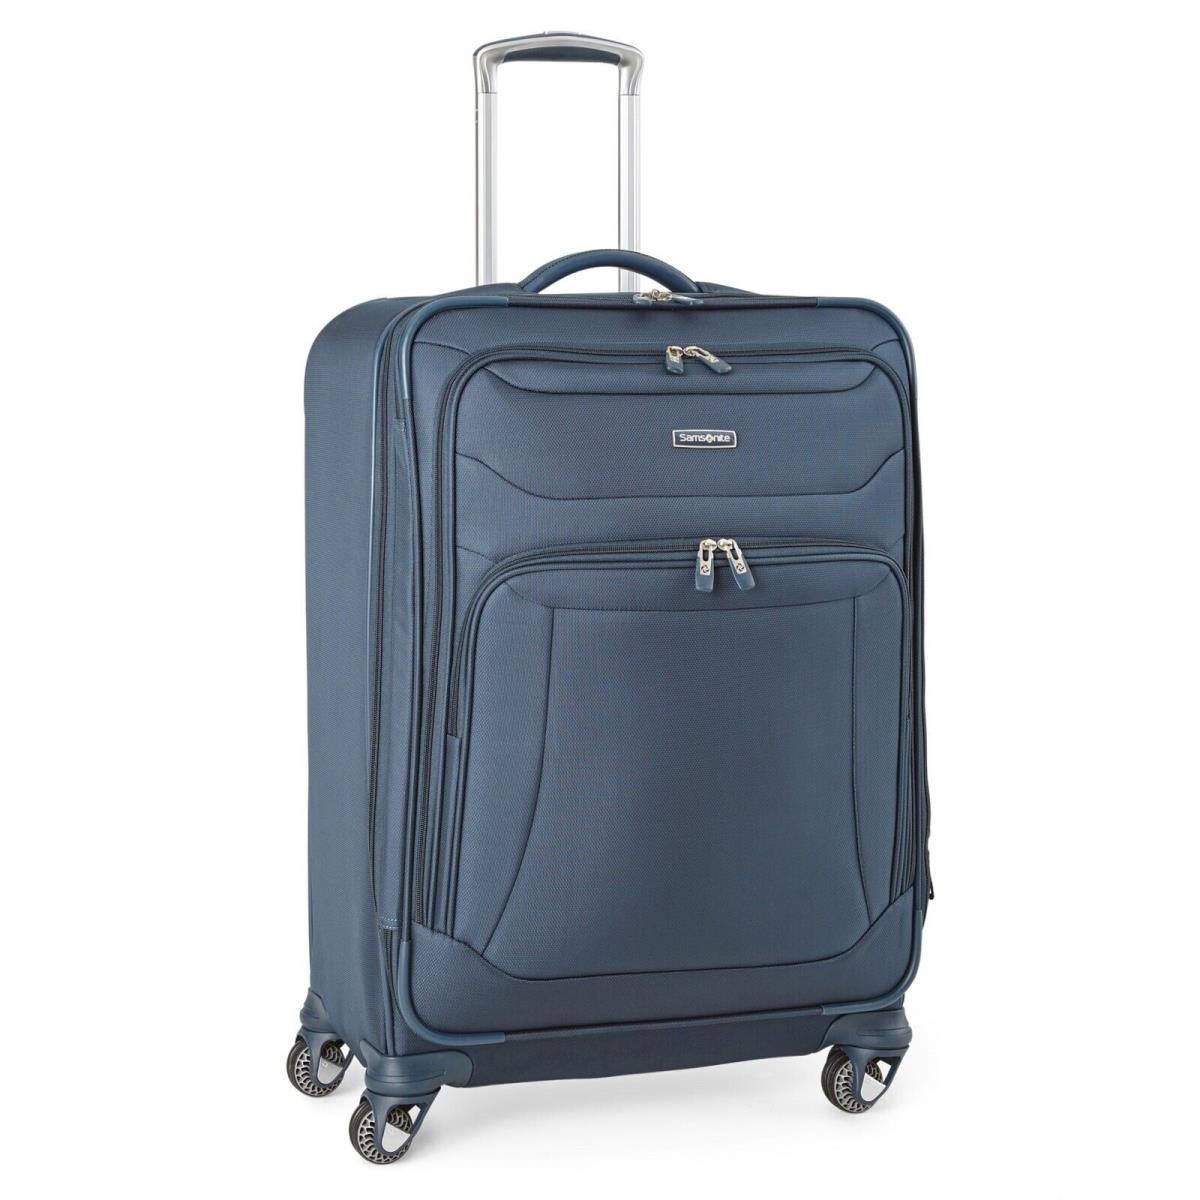 Samsonite 270992 Spheretec 25 Inch Spinner Luggage Majolica Blue